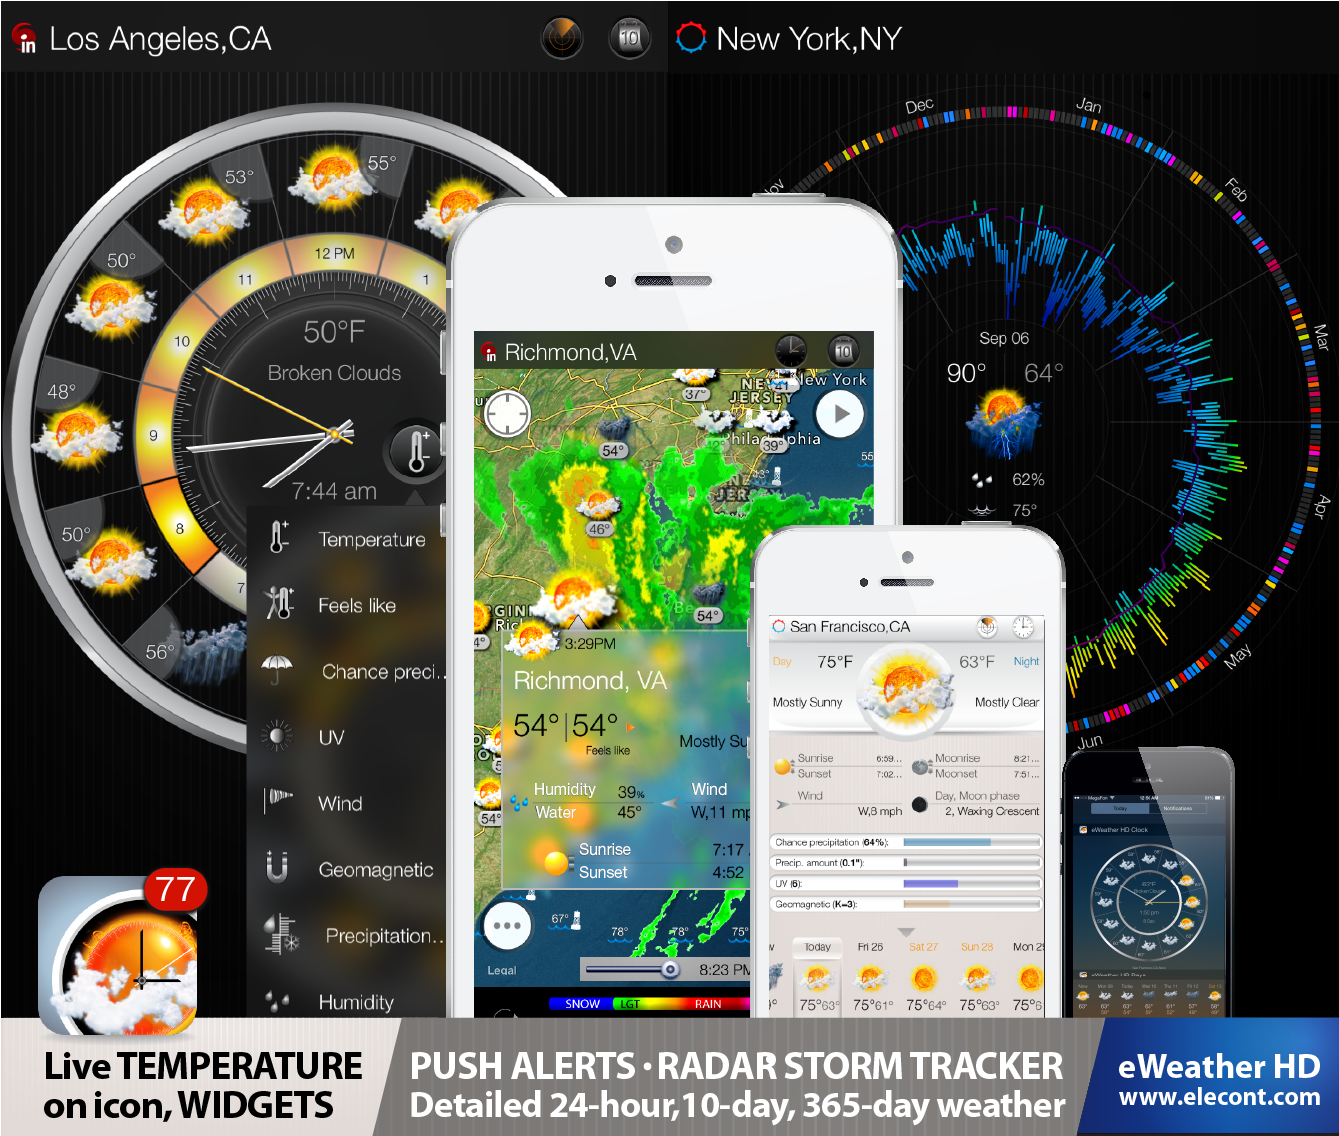 eweather-hd-weather-app-iphone-ipad-alerts-radar-long-range-weather-storm-tracker-earthquakes-buoy-finder-earthquakes-10-day-weather-hourly-weather-meteo-alarms-iphone-ipad-pr.png